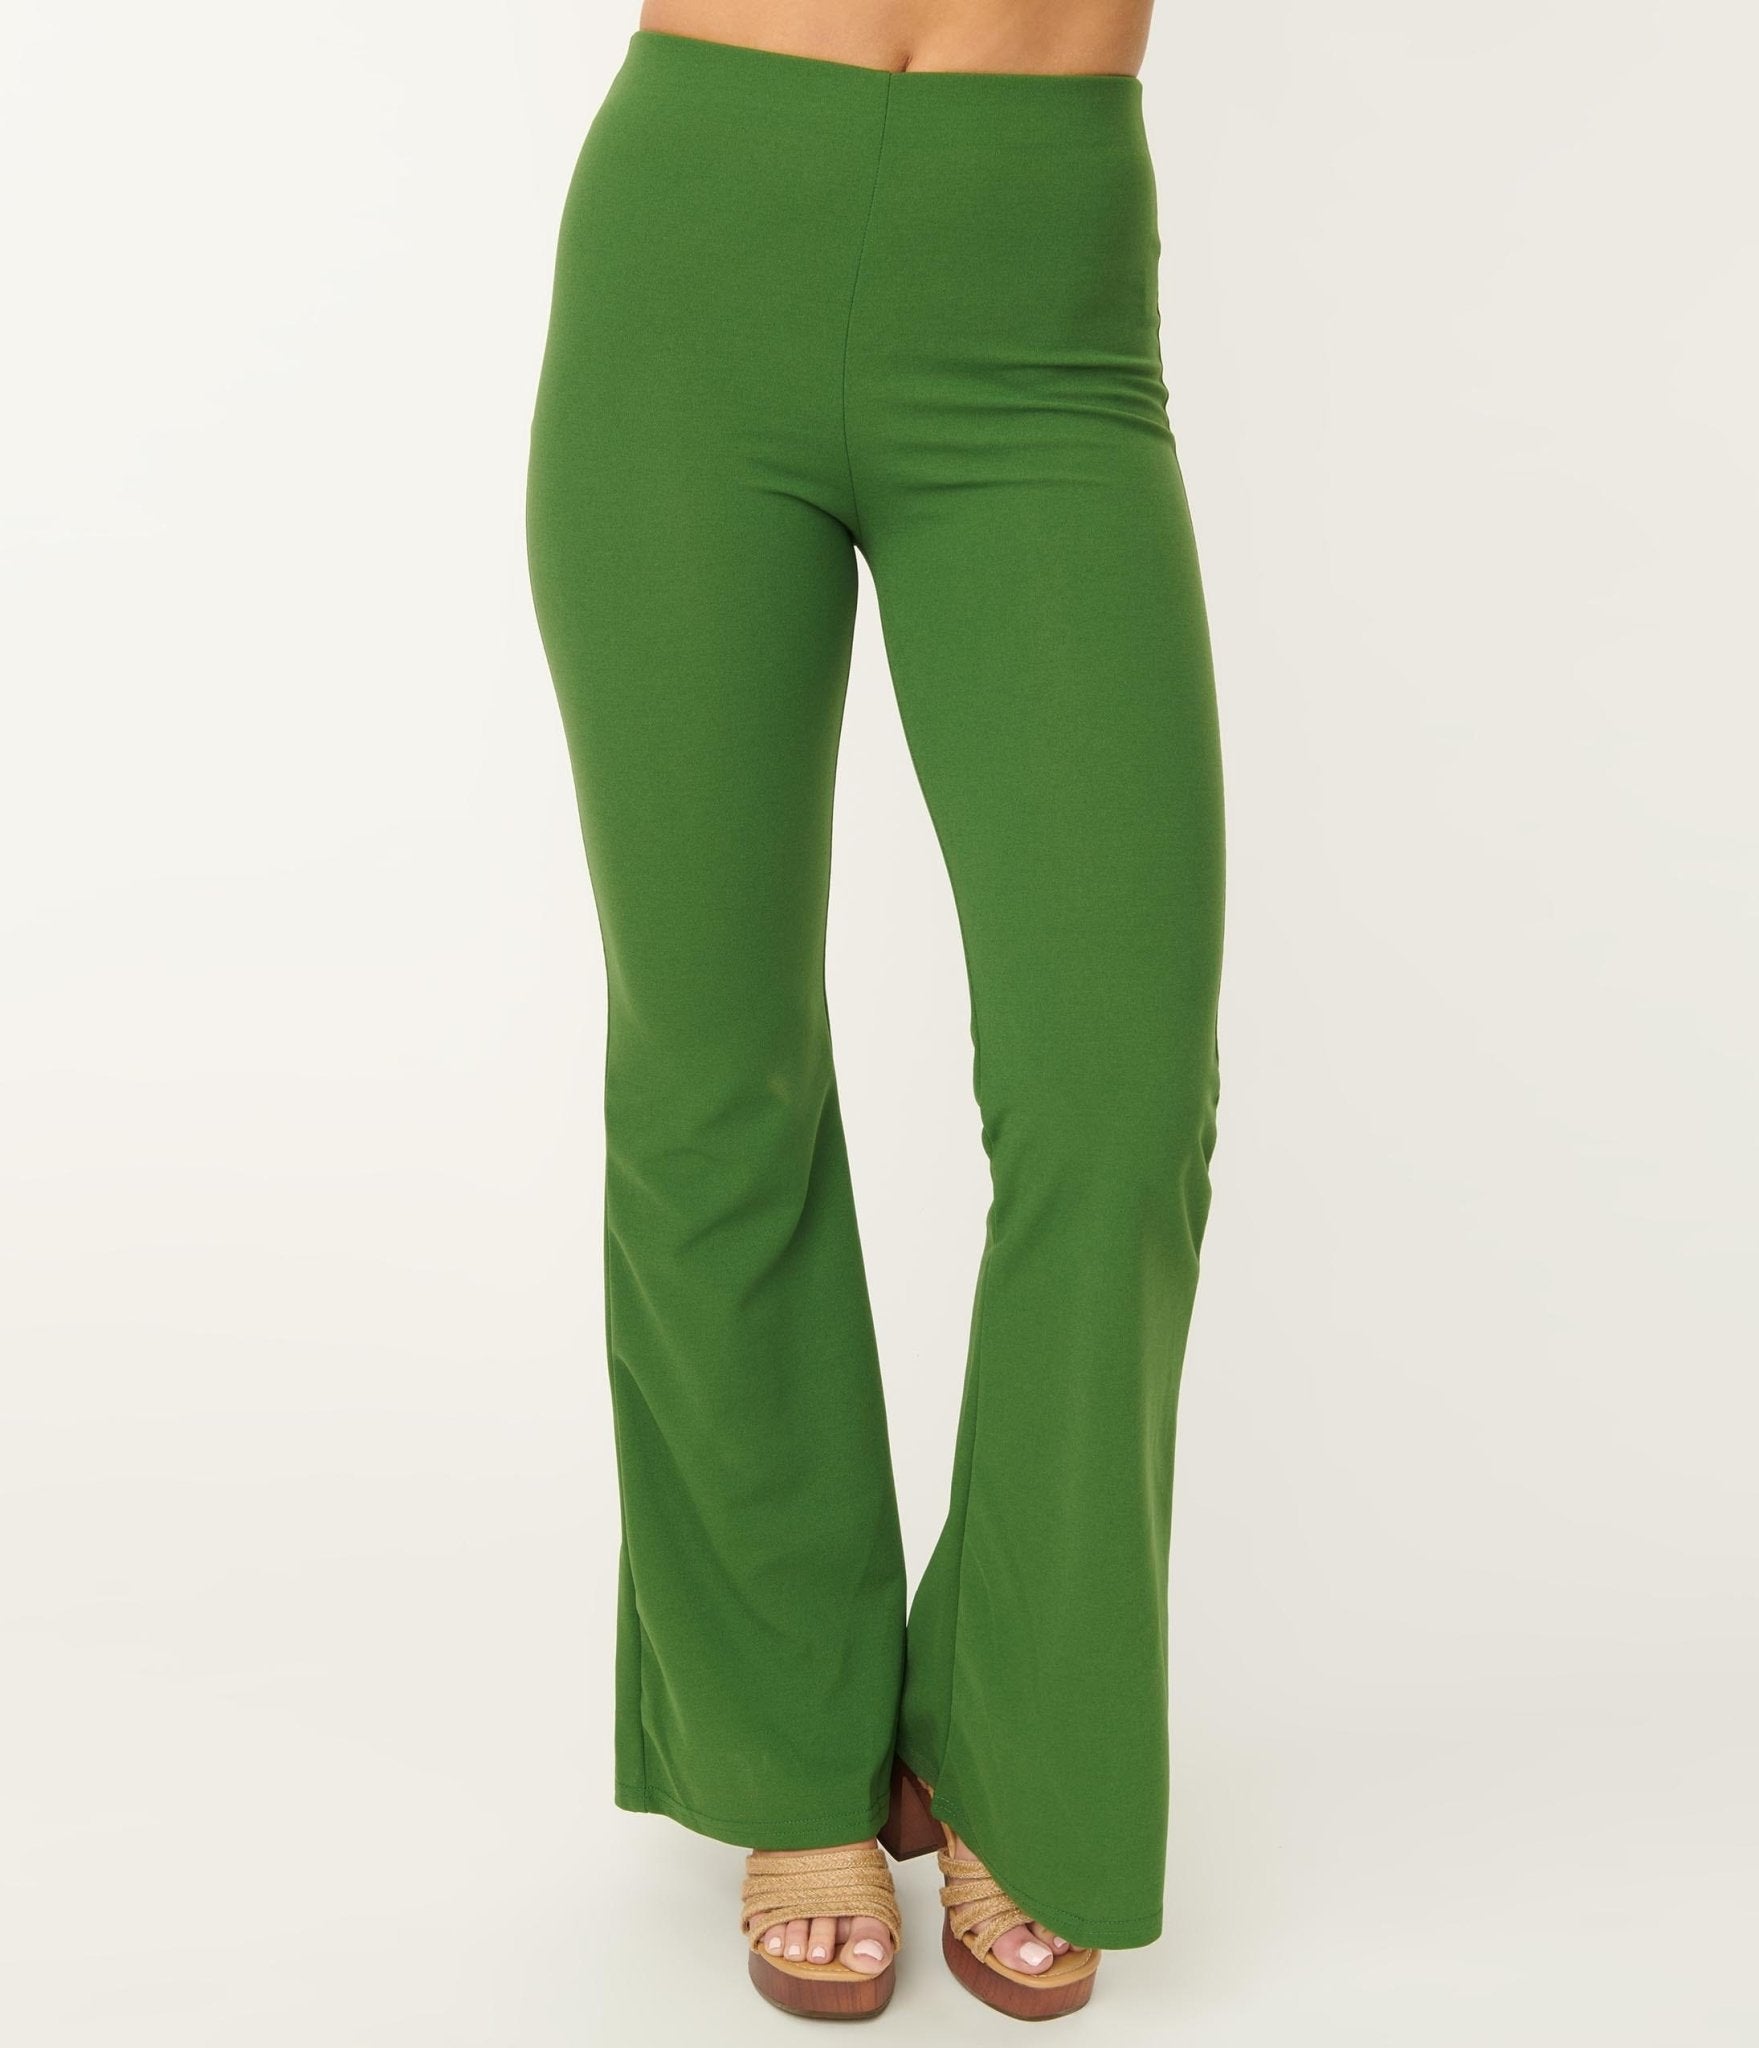 Capreze Corduroy Pants For Women Bootcut High Waist Wide Leg Trousers Pants  Ladies Fall Vintage Flared Pants Loungewear Green S 